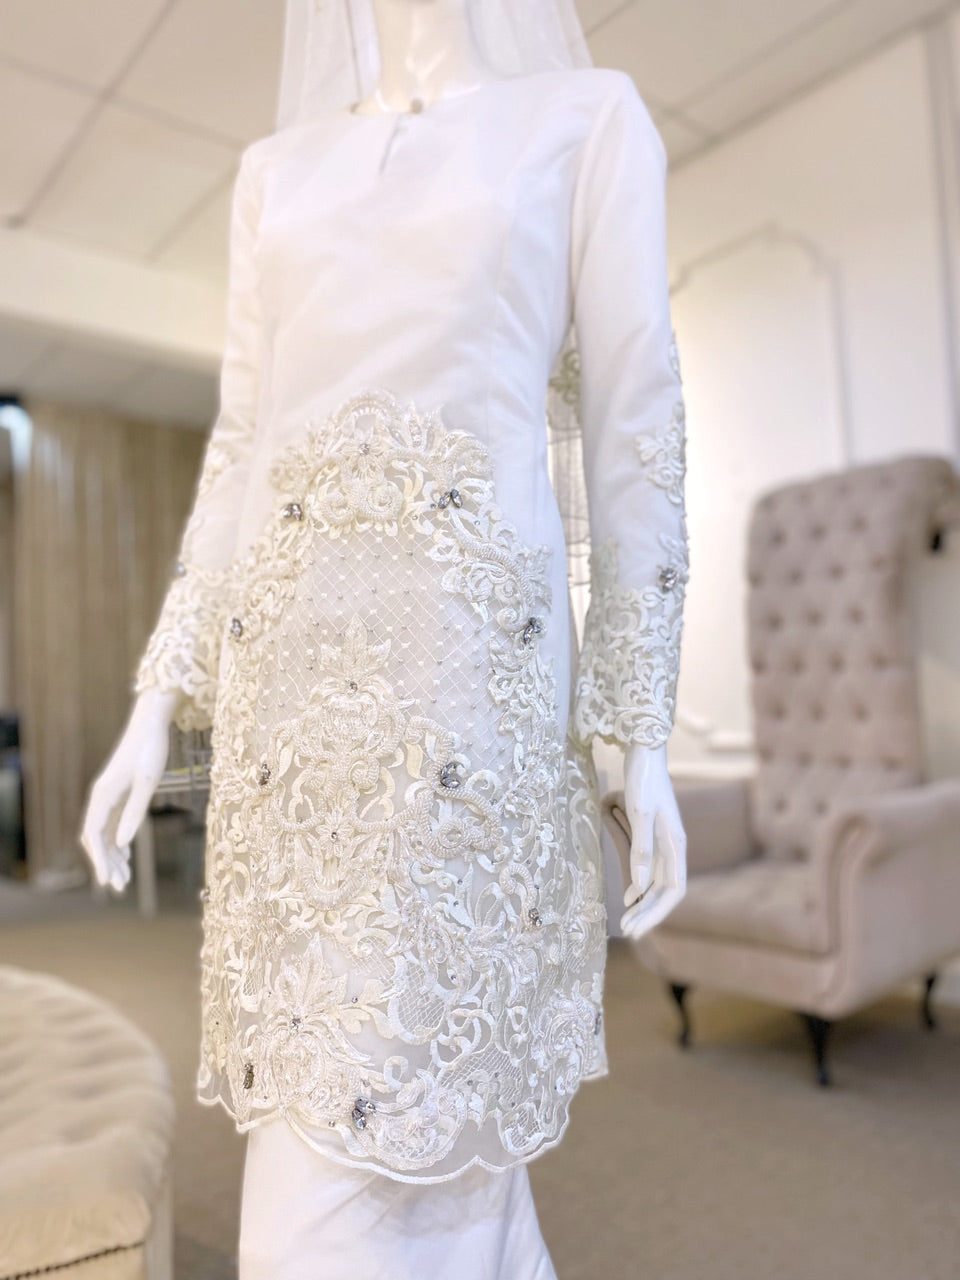 MELATI - Baju Nikah Kurung Off-White Duchess- Baju Kurung Nikah-Baju Melayu Nikah-Kebaya Nikah-Gaun Nikah-Pakaian Nikah-Sewa Baju Nikah-Beli Baju Nikah-Baju Nikah Online-Baju Nikah Malaysia-Baju Nikah Muslim-Baju Nikah Tradisional-Baju Nikah Moden-Baju Nikah Johor-Baju Nikah Selangor-Baju Nikah Kuala Lumpur